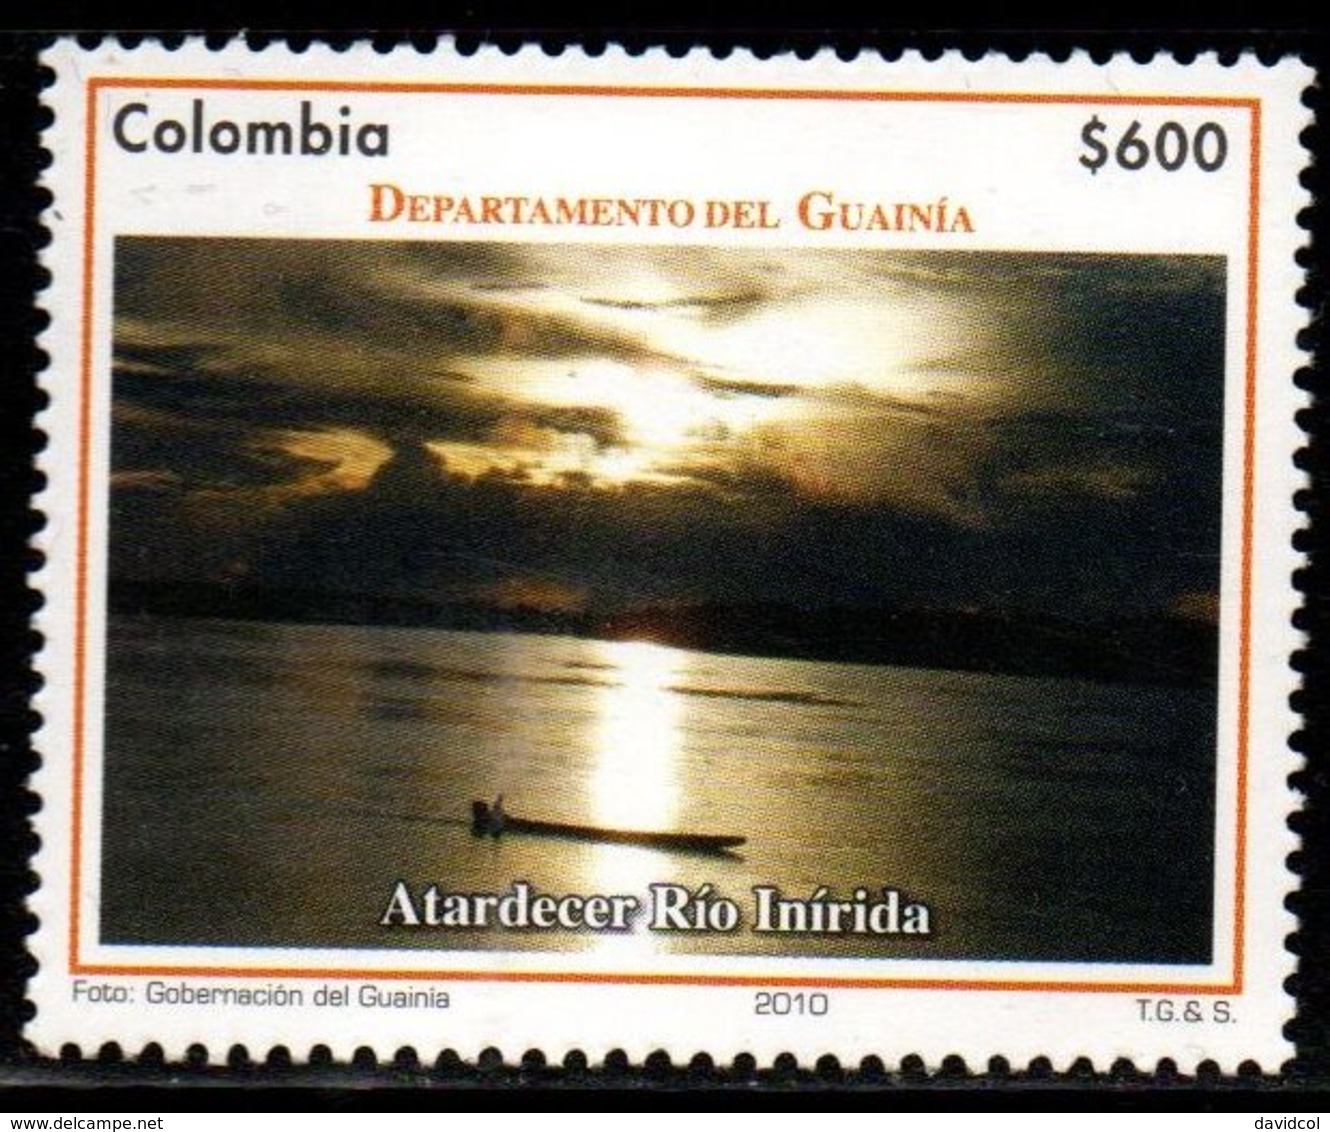 A545M- KOLUMBIEN - MNH - 2010 - GUAINIA DEPARTMENT - INIRIDA RIVER - Kolumbien